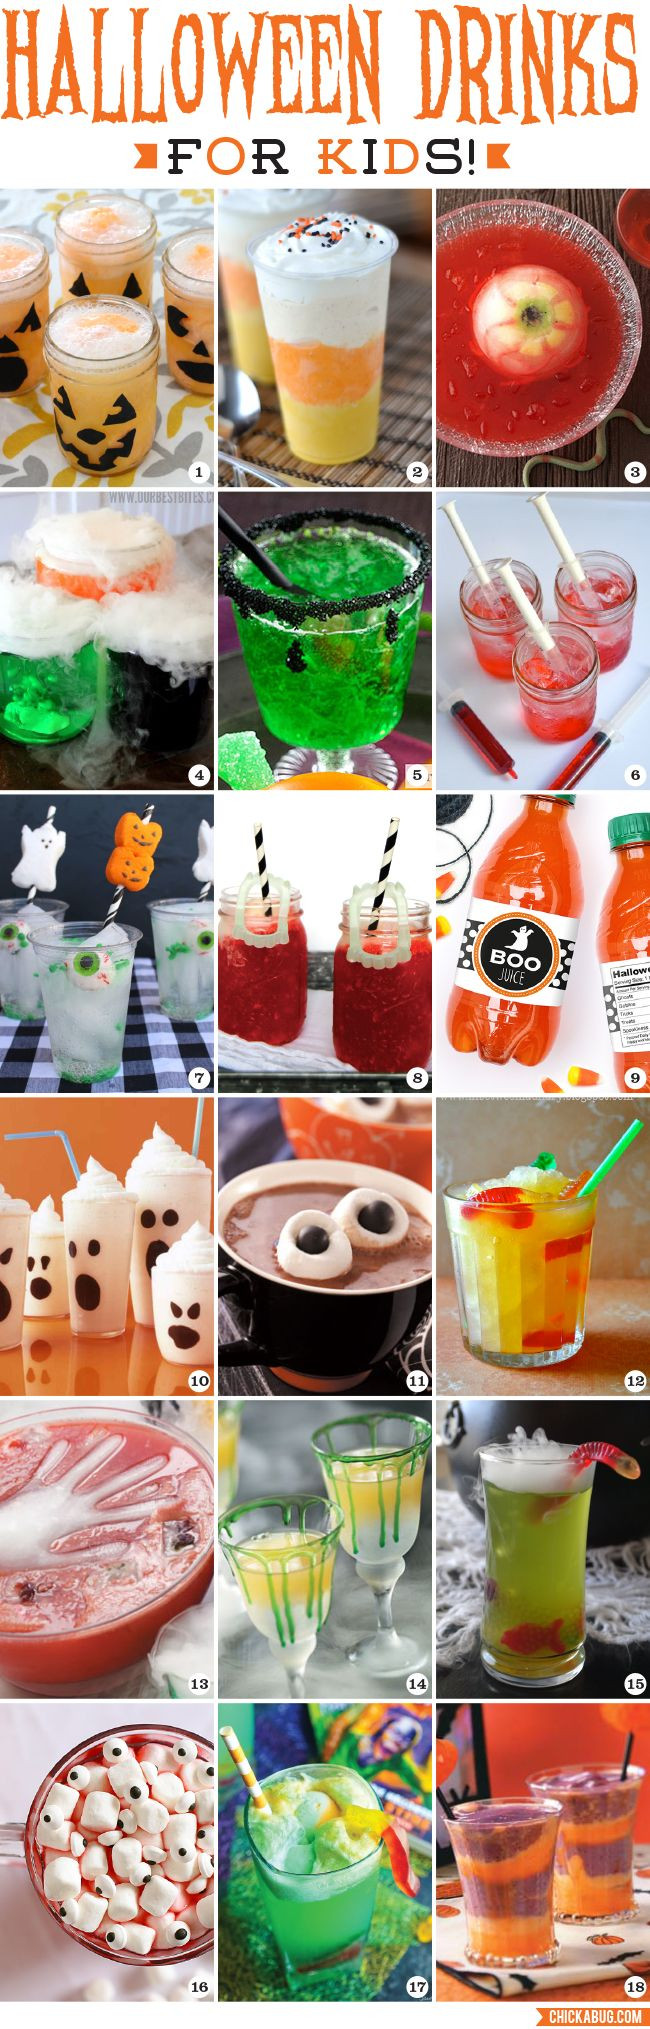 Halloween Party Food And Drink Ideas
 Best 25 Kids halloween parties ideas on Pinterest